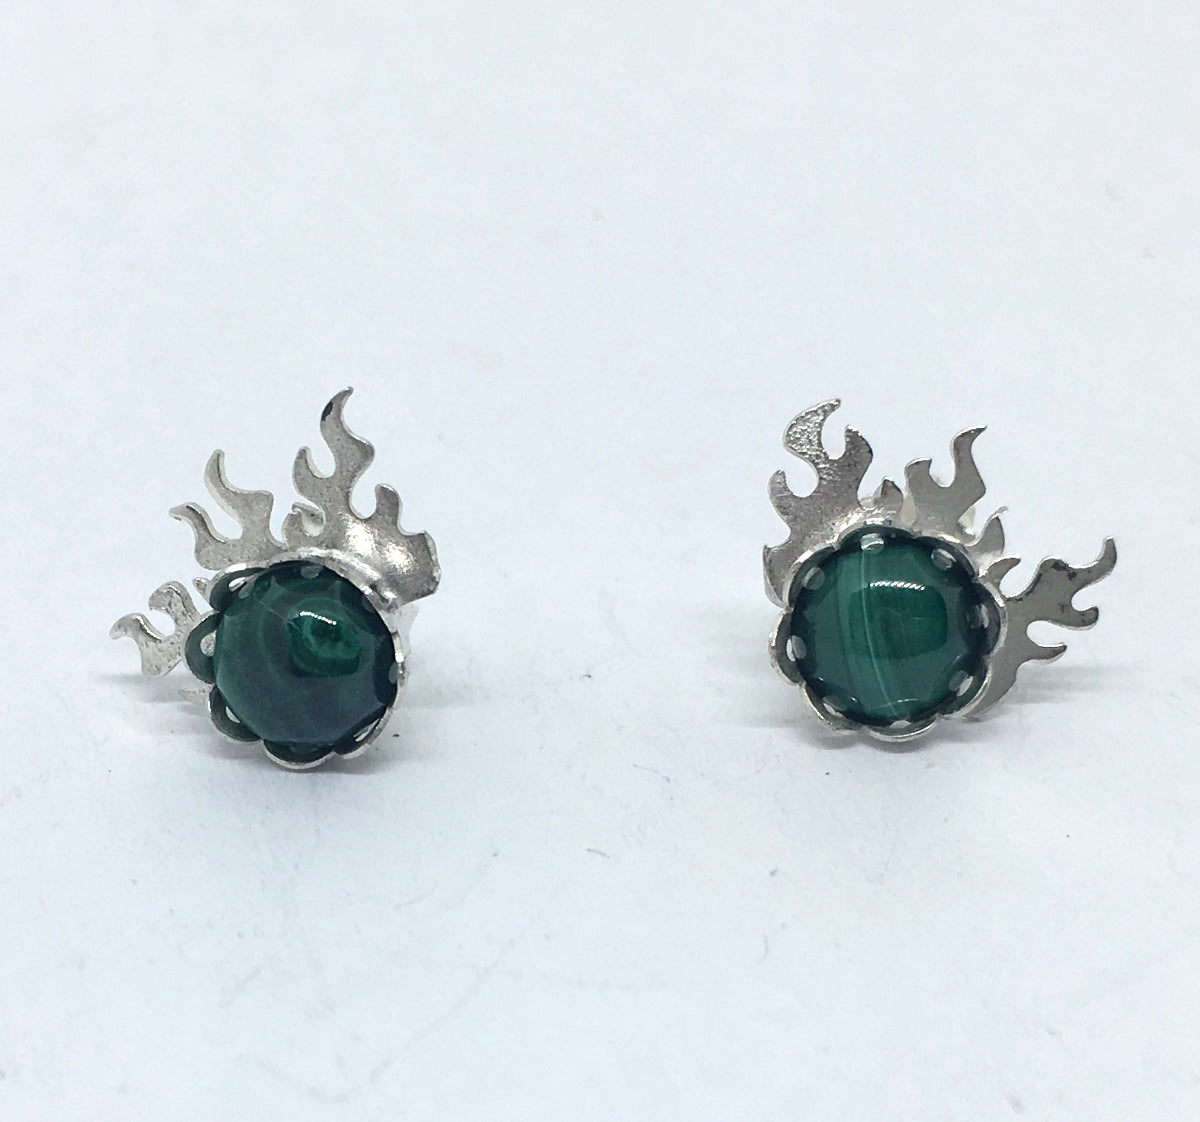 fire earrings with malachite gemstones  in sterling silver